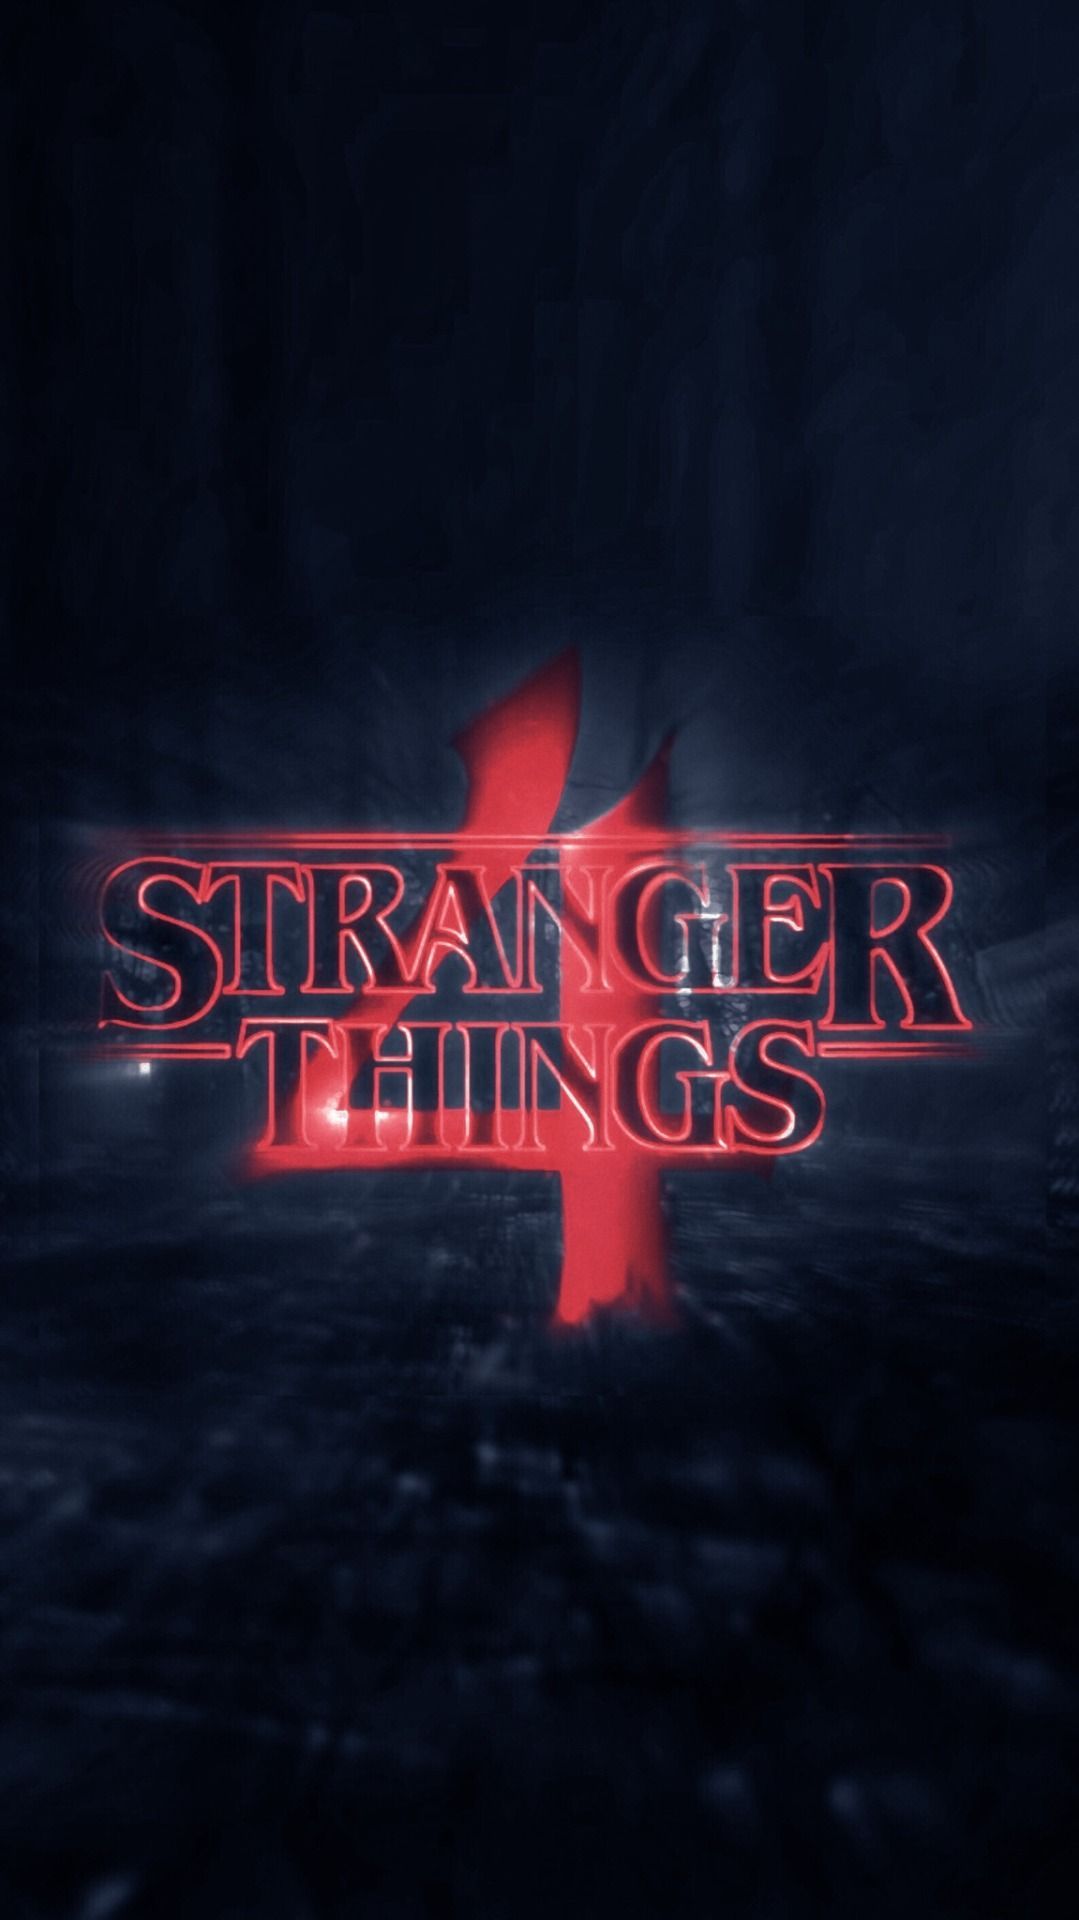 Fondos de pantalla de Stranger Things 4 - FondosMil